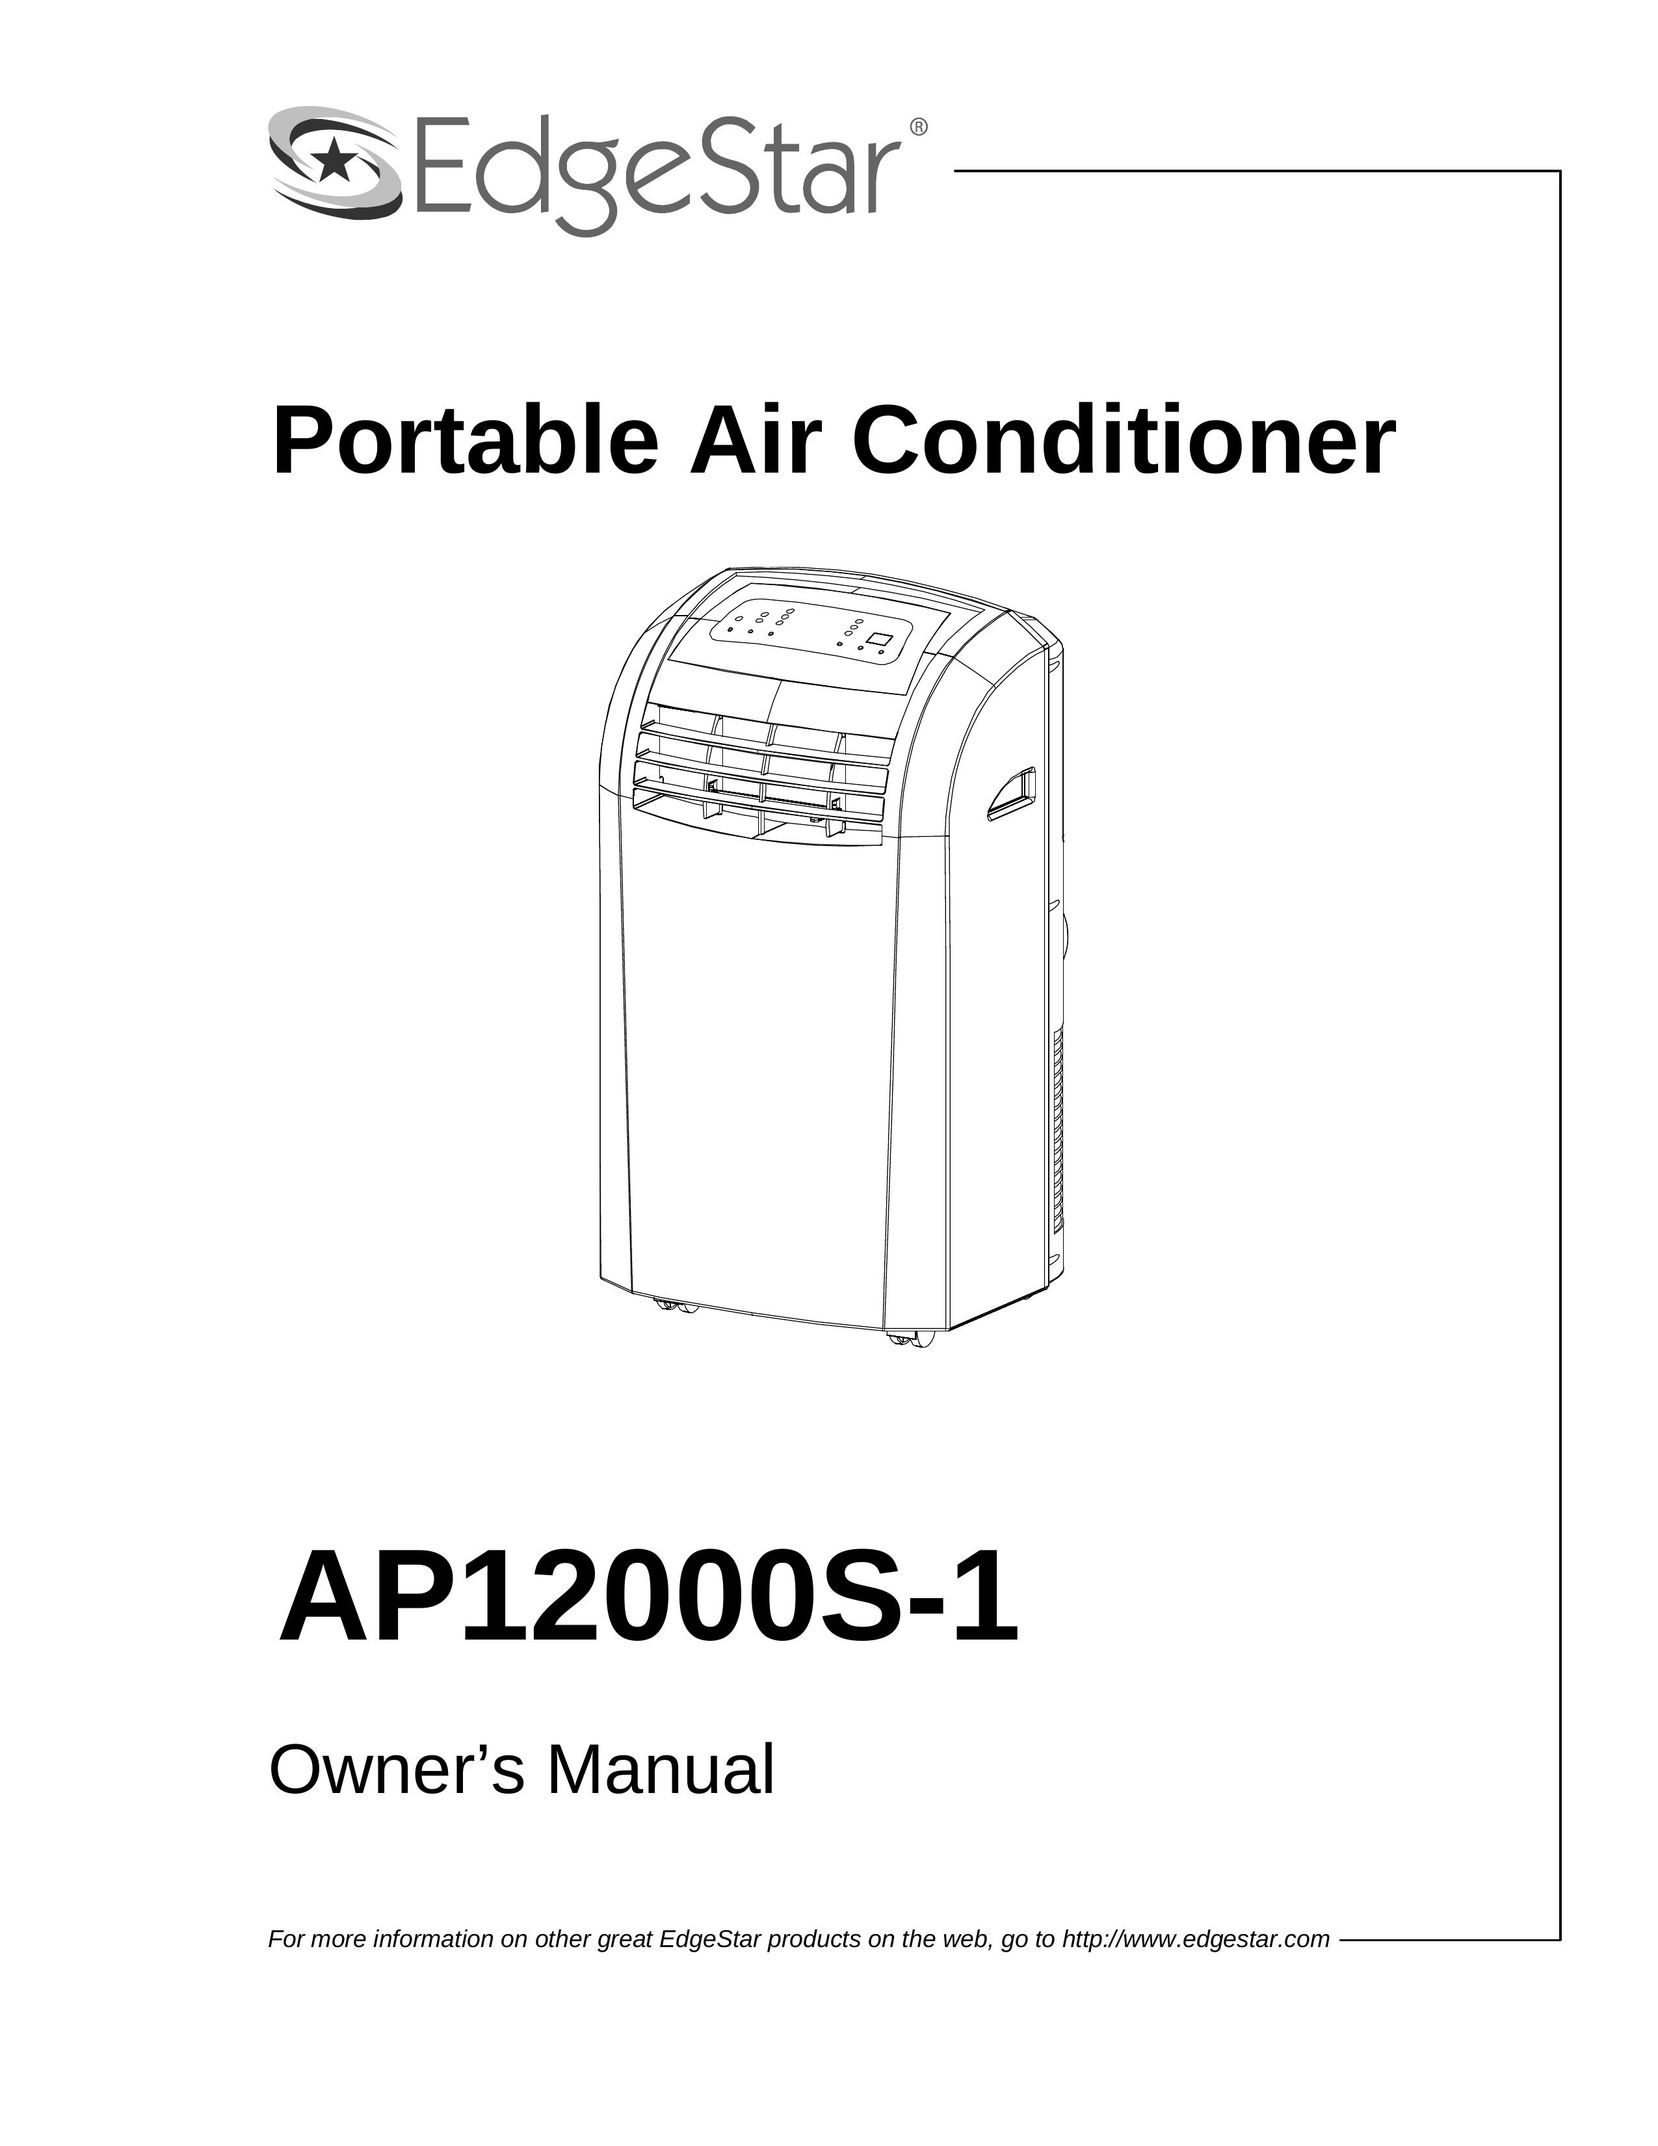 EdgeStar AP12000S-1 Air Conditioner User Manual